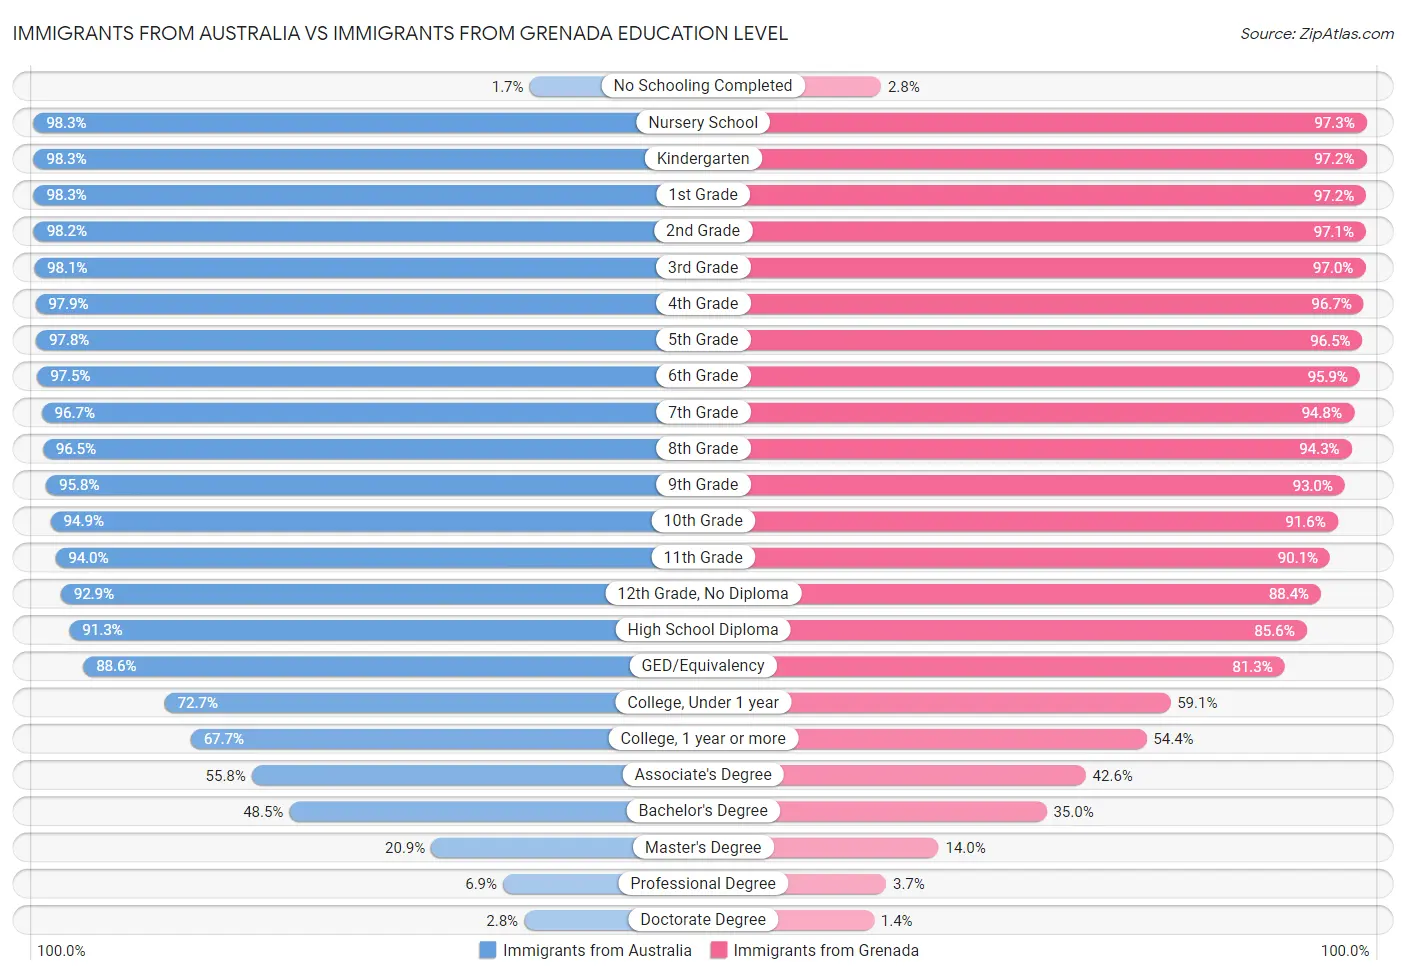 Immigrants from Australia vs Immigrants from Grenada Education Level